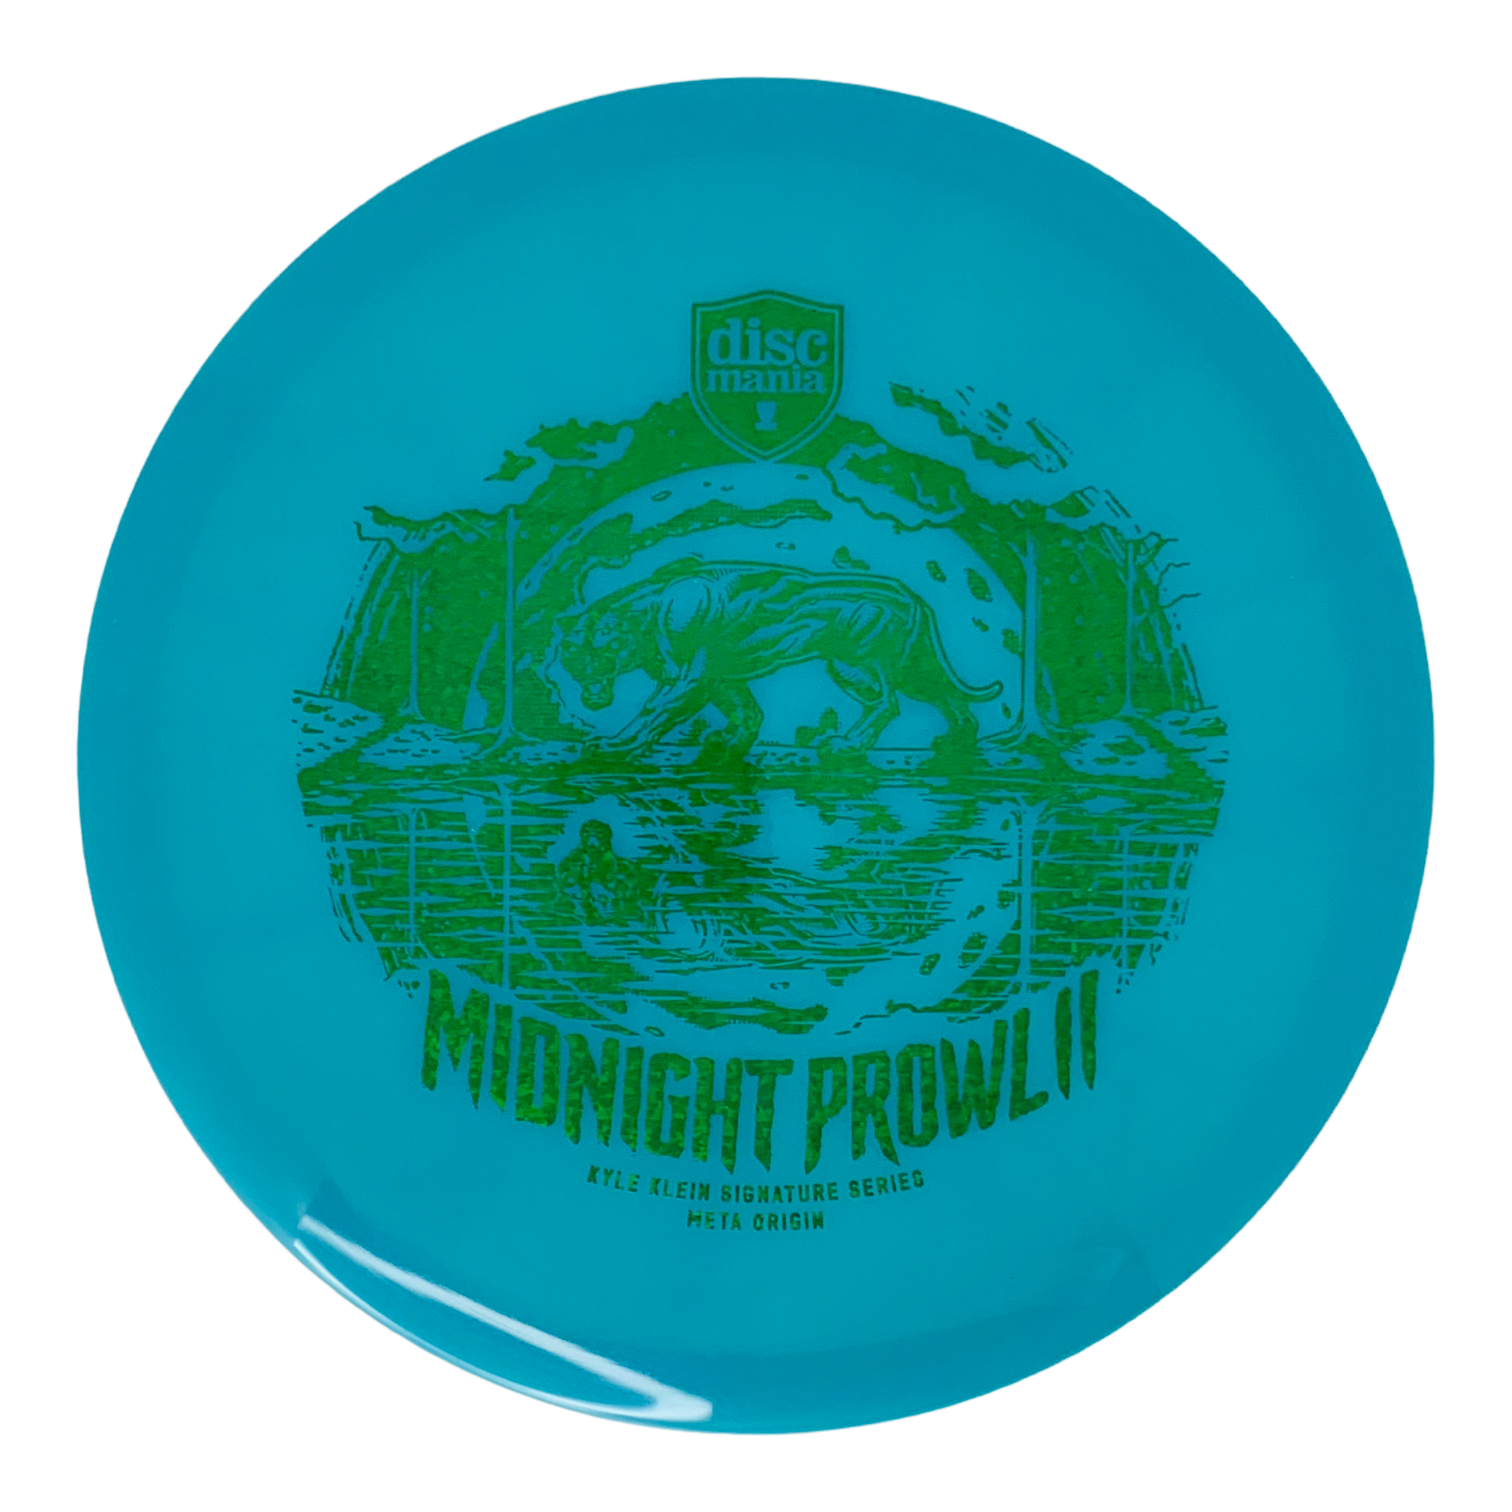 Discmania Meta Origin Midnight Prowl 2 - Kyle Klein Meta Origin